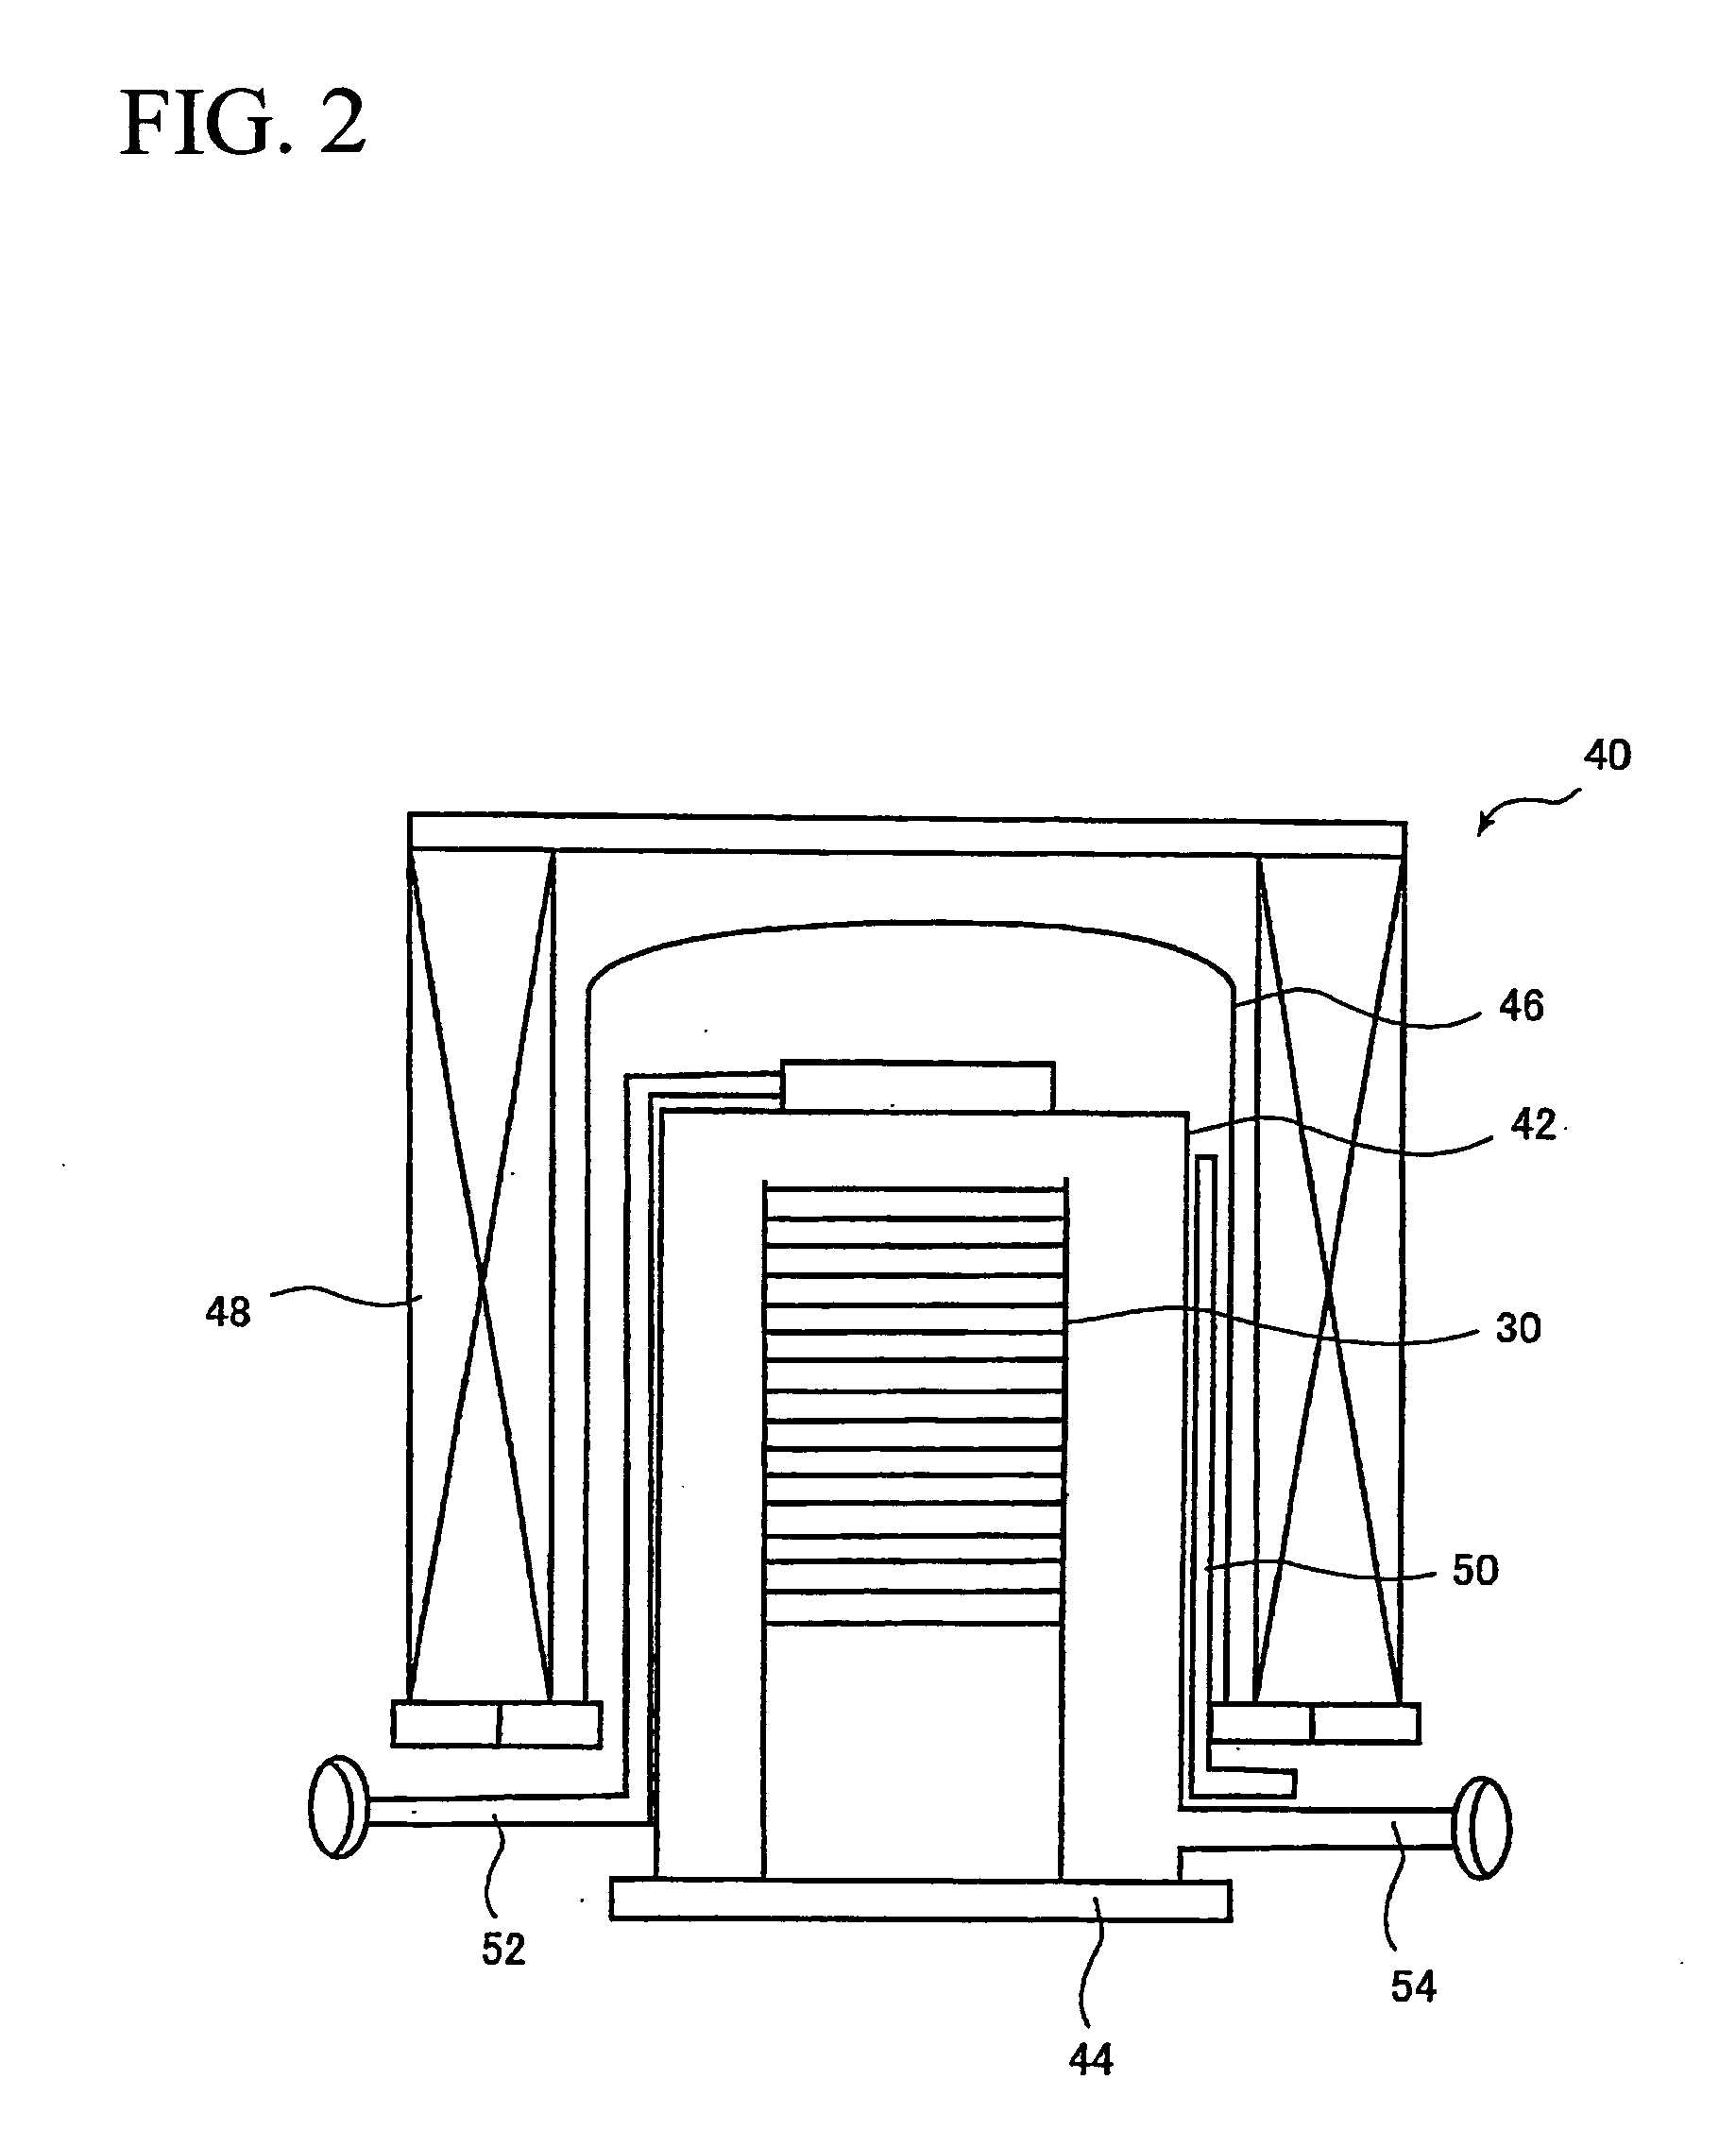 Heat Treatment Apparatus